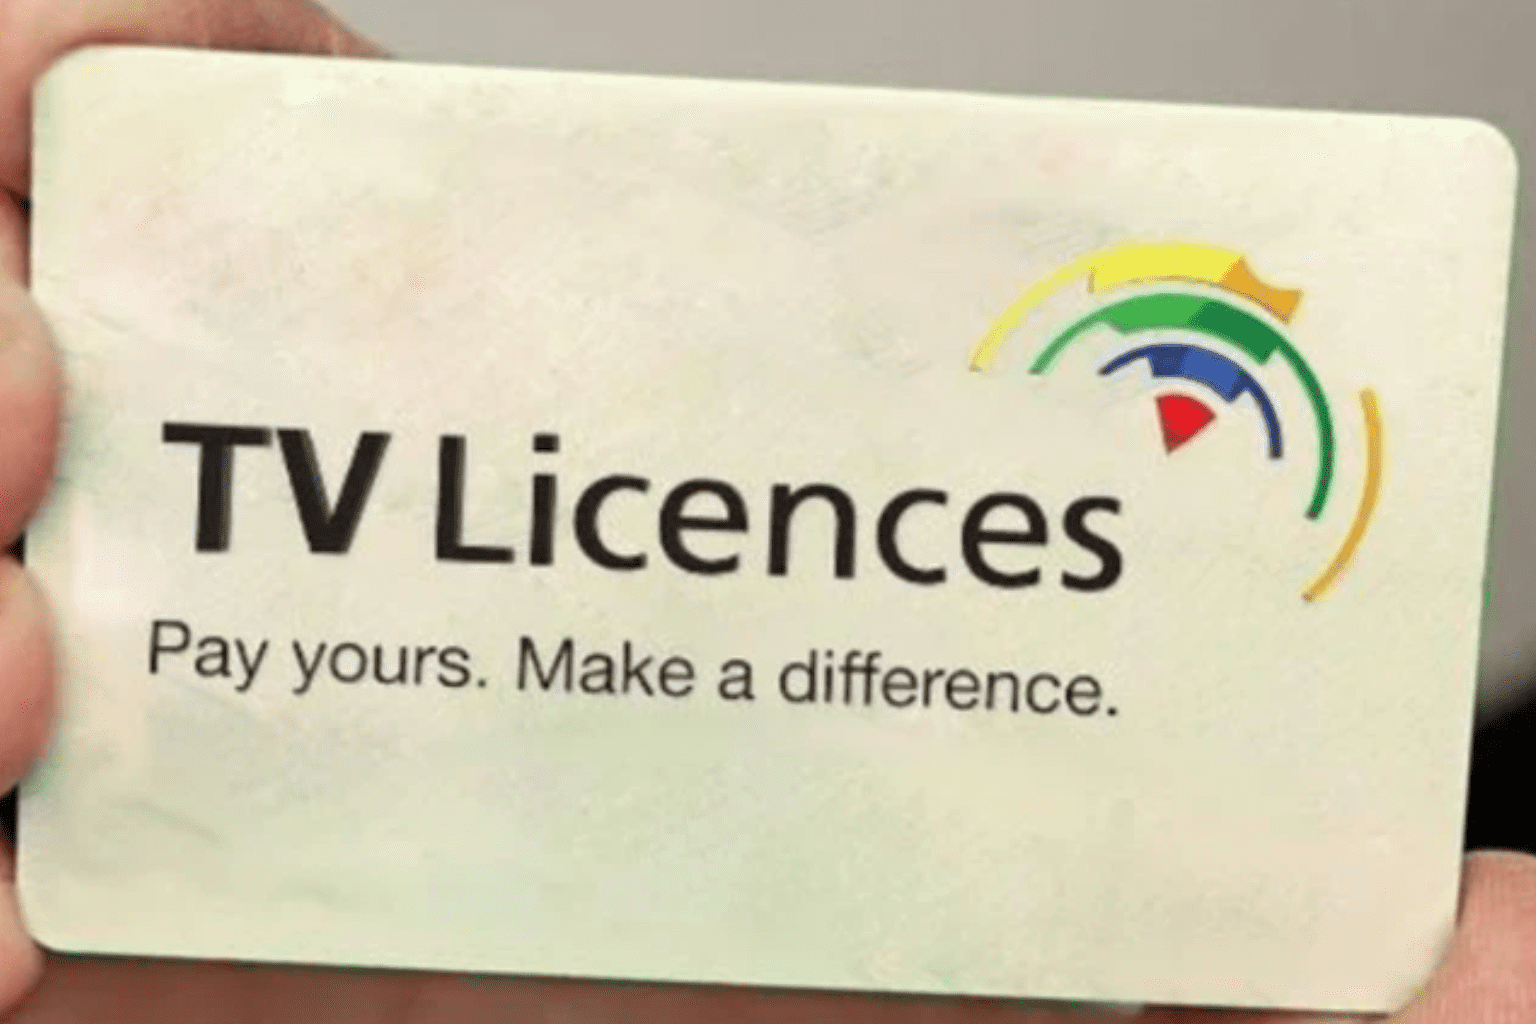 TV licences